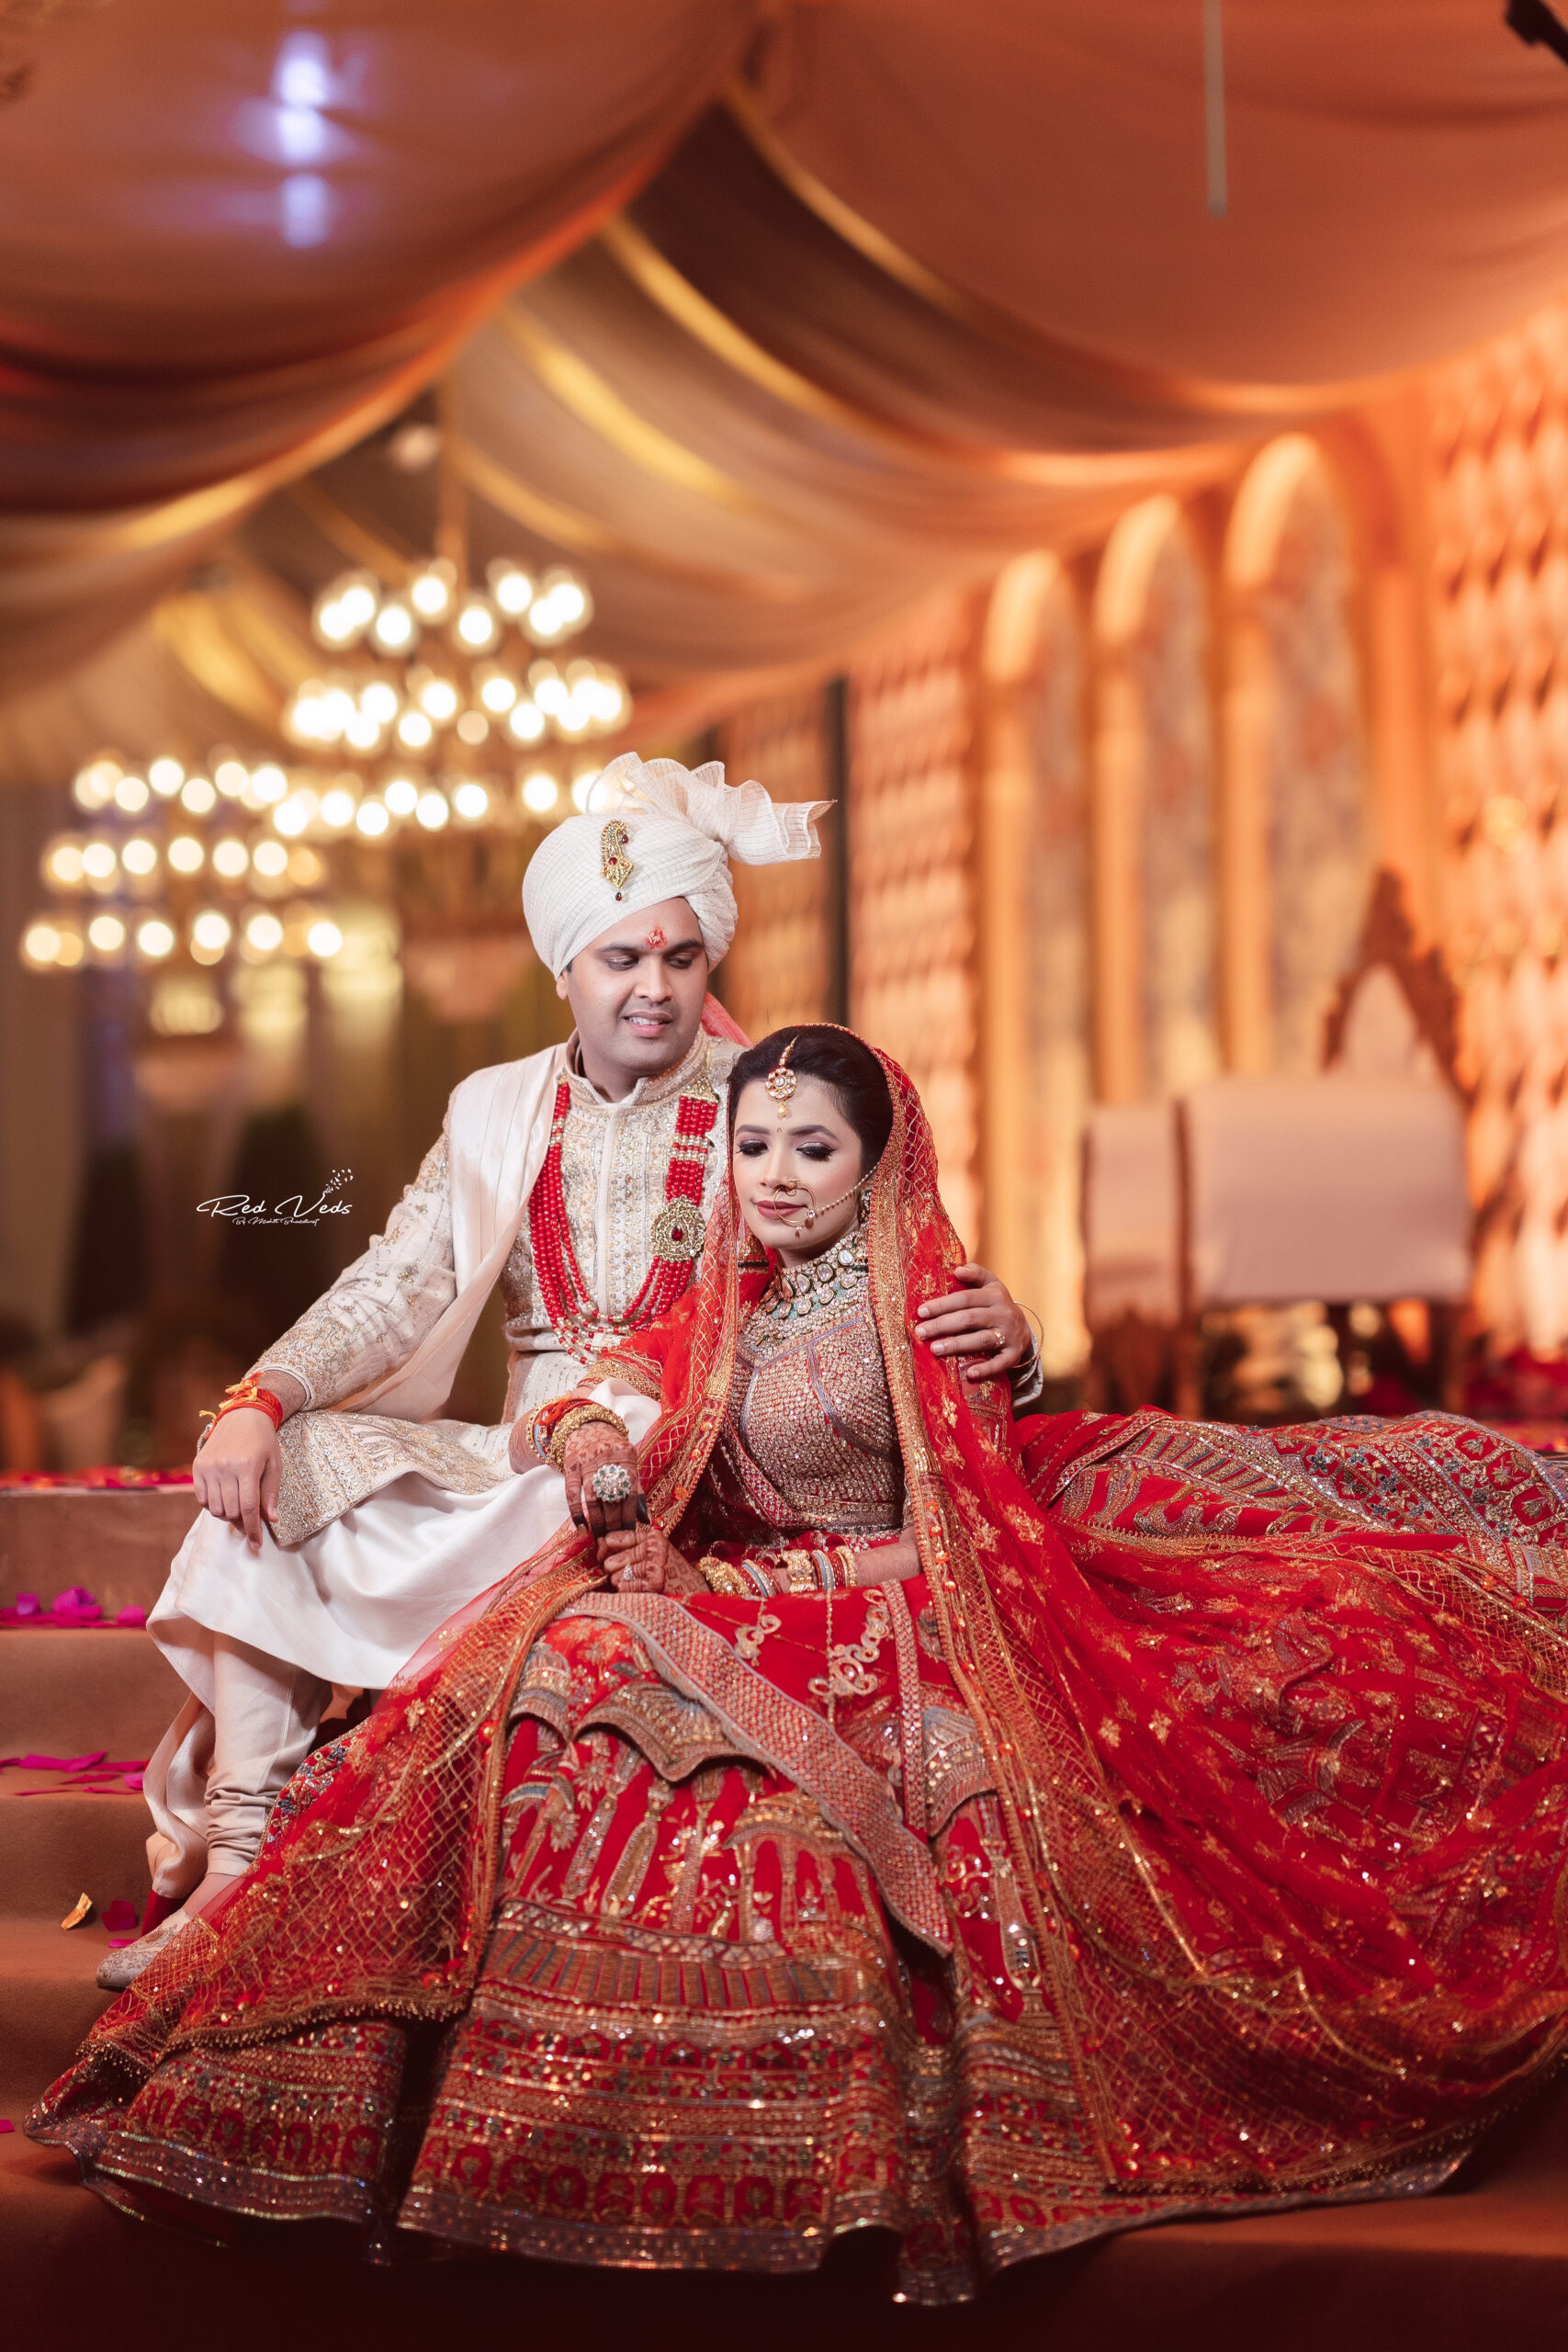 Pin by Urmilaa Jasawat on aBridal photography | Indian bride photography  poses, Bride photography poses, Indian wedding photography poses